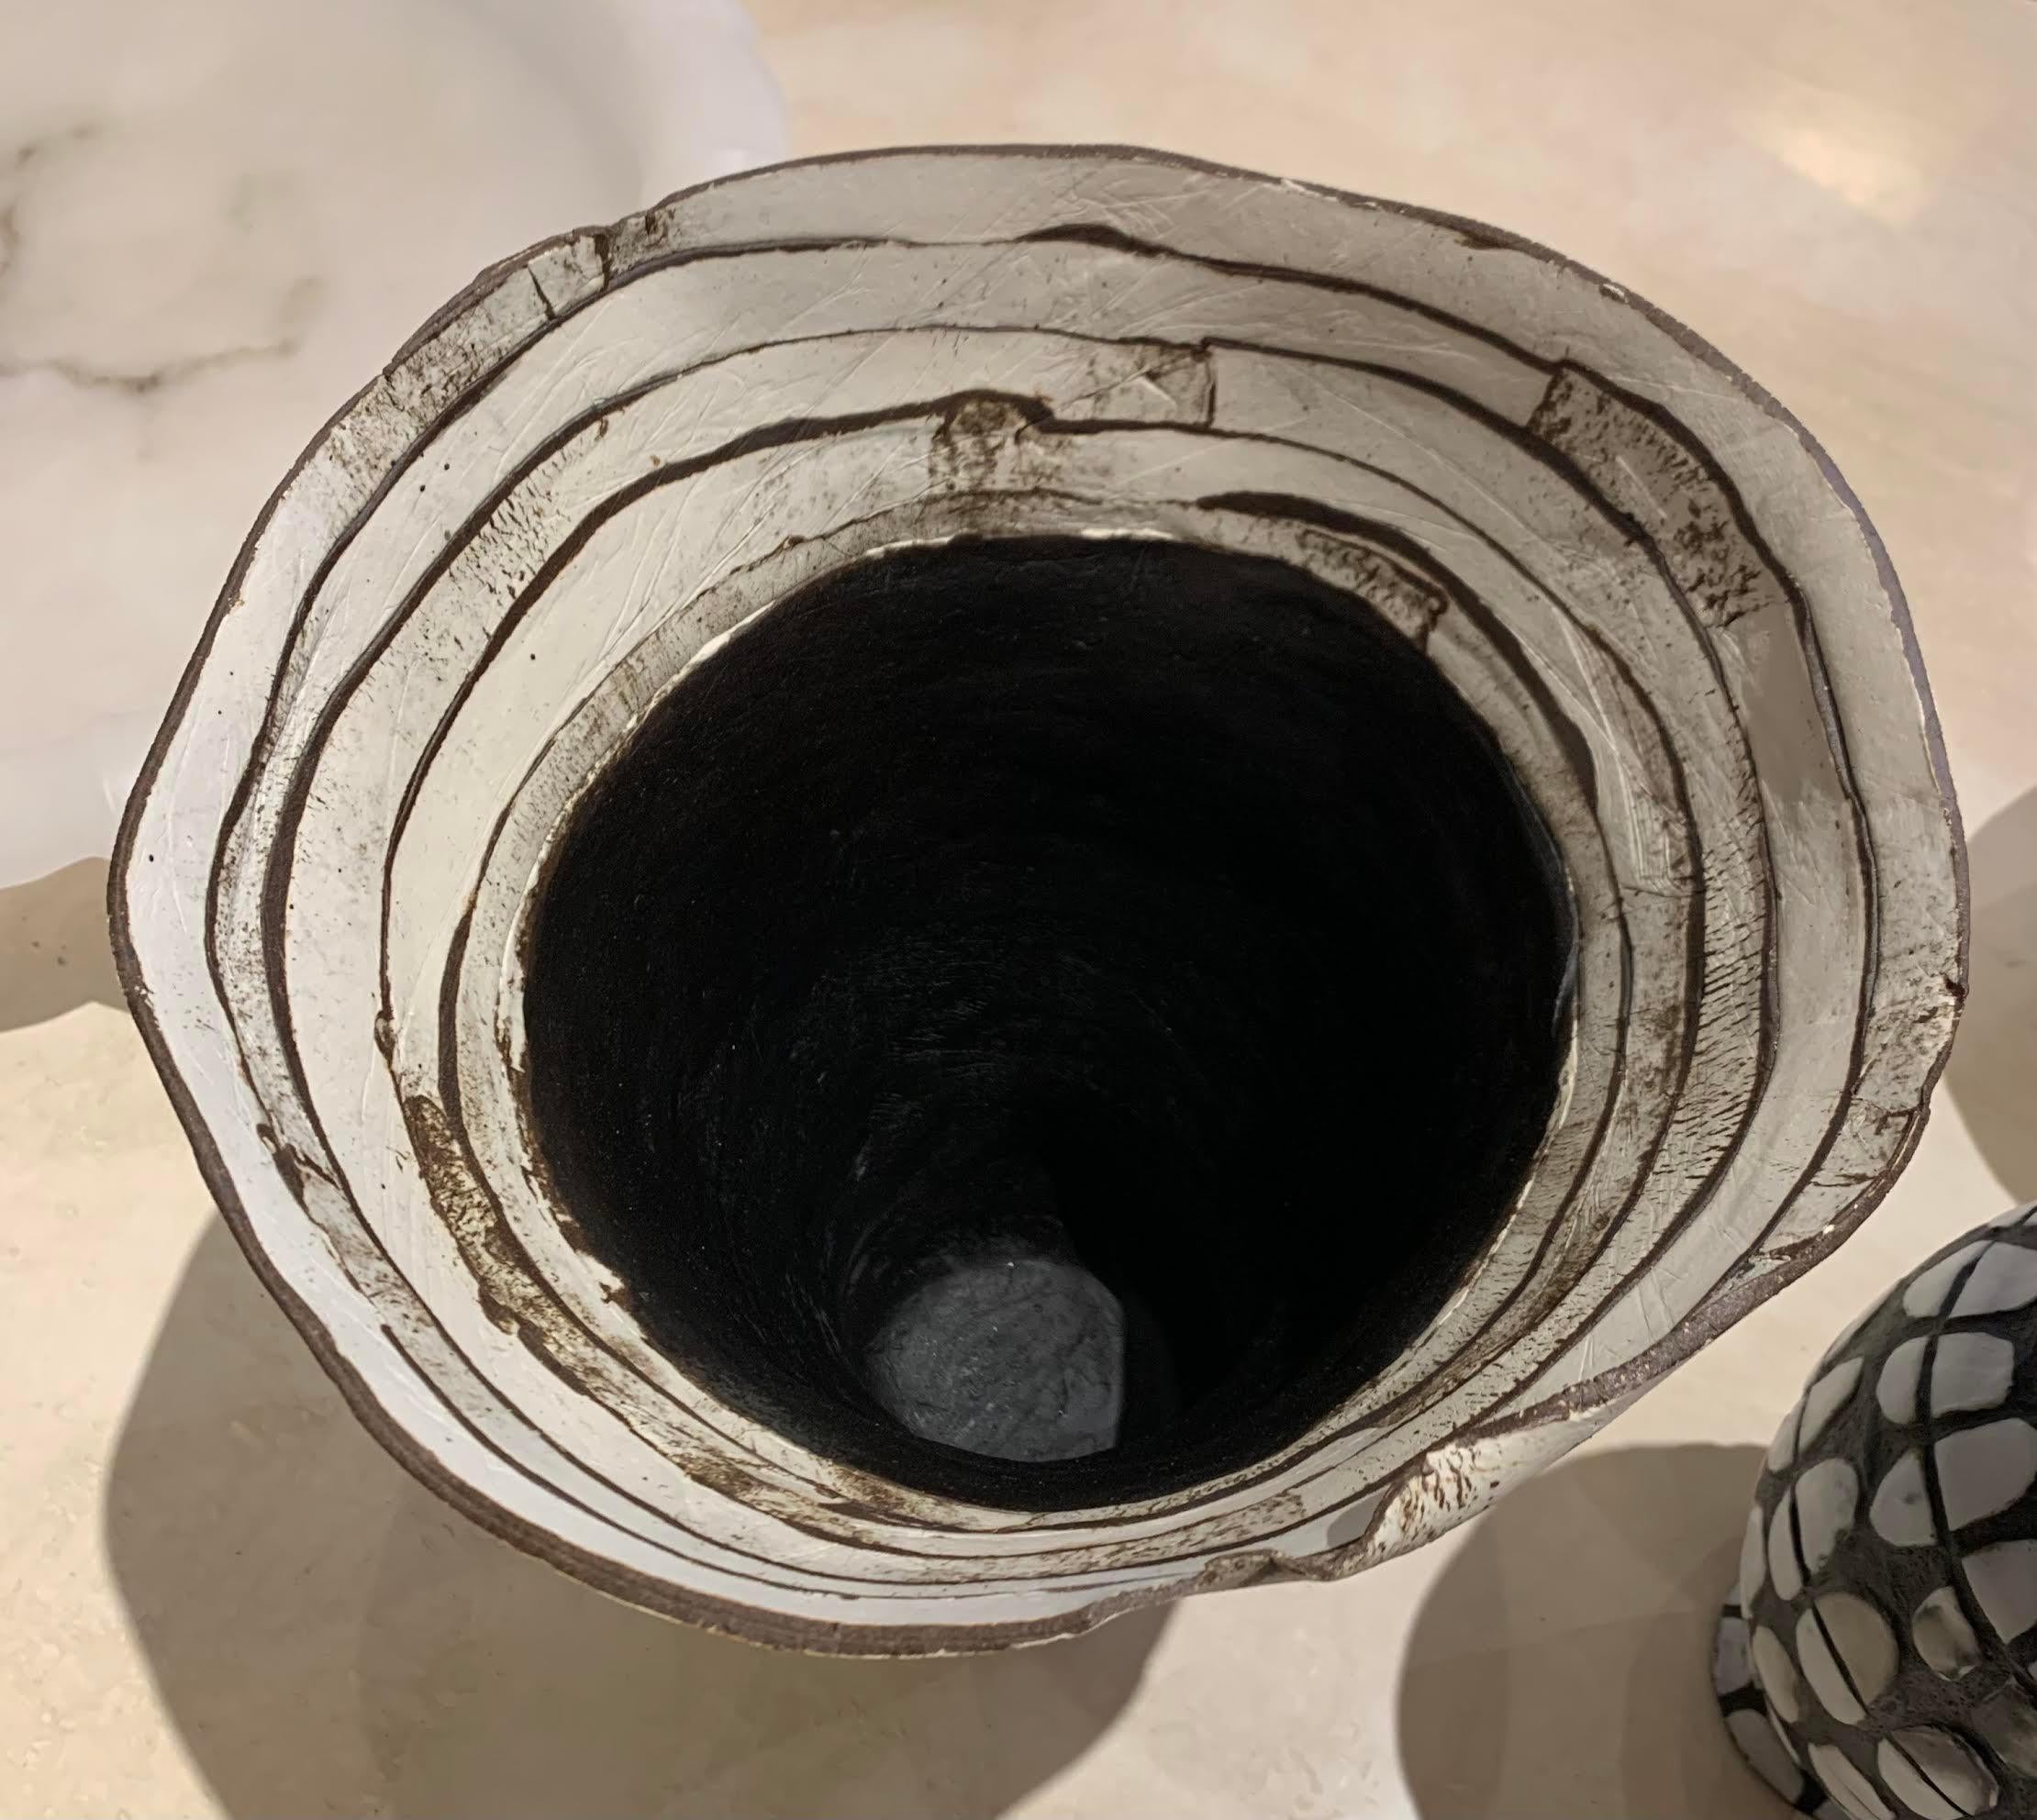 North American Black and White Stripe Ceramic Vase By Brenda Holzke, USA, Contemporary